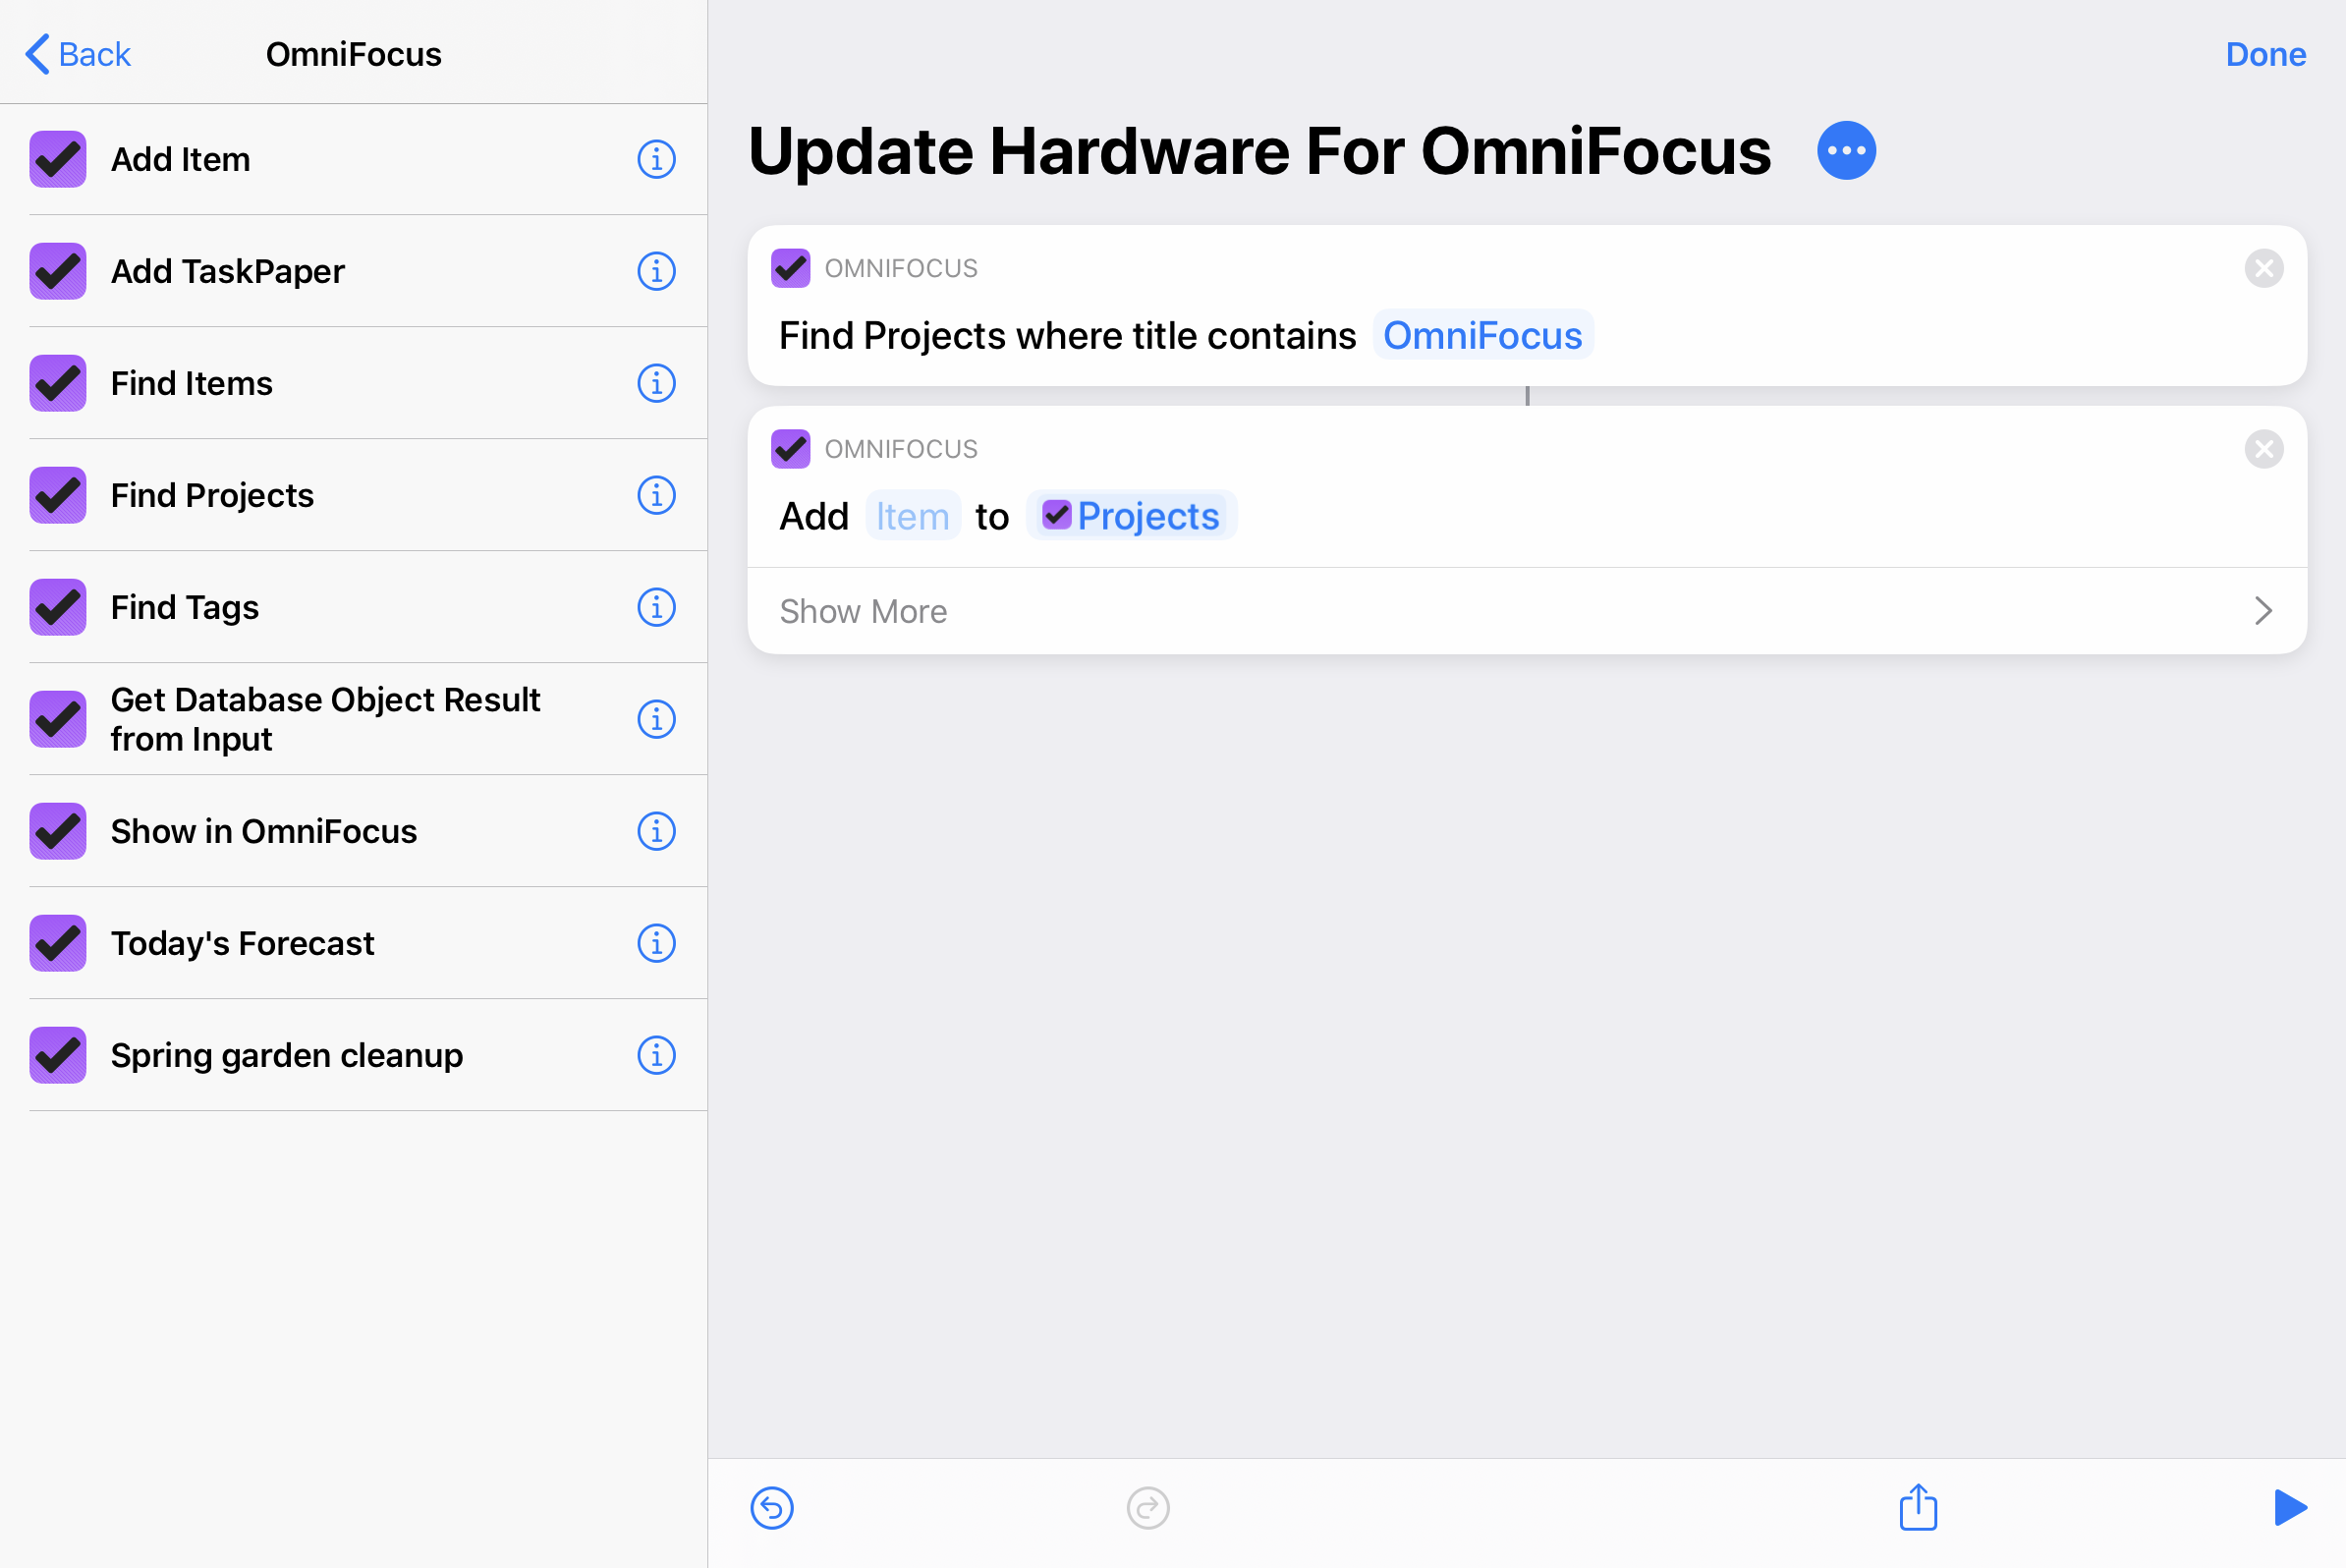 OmniFocus actions in the Shortcuts app.